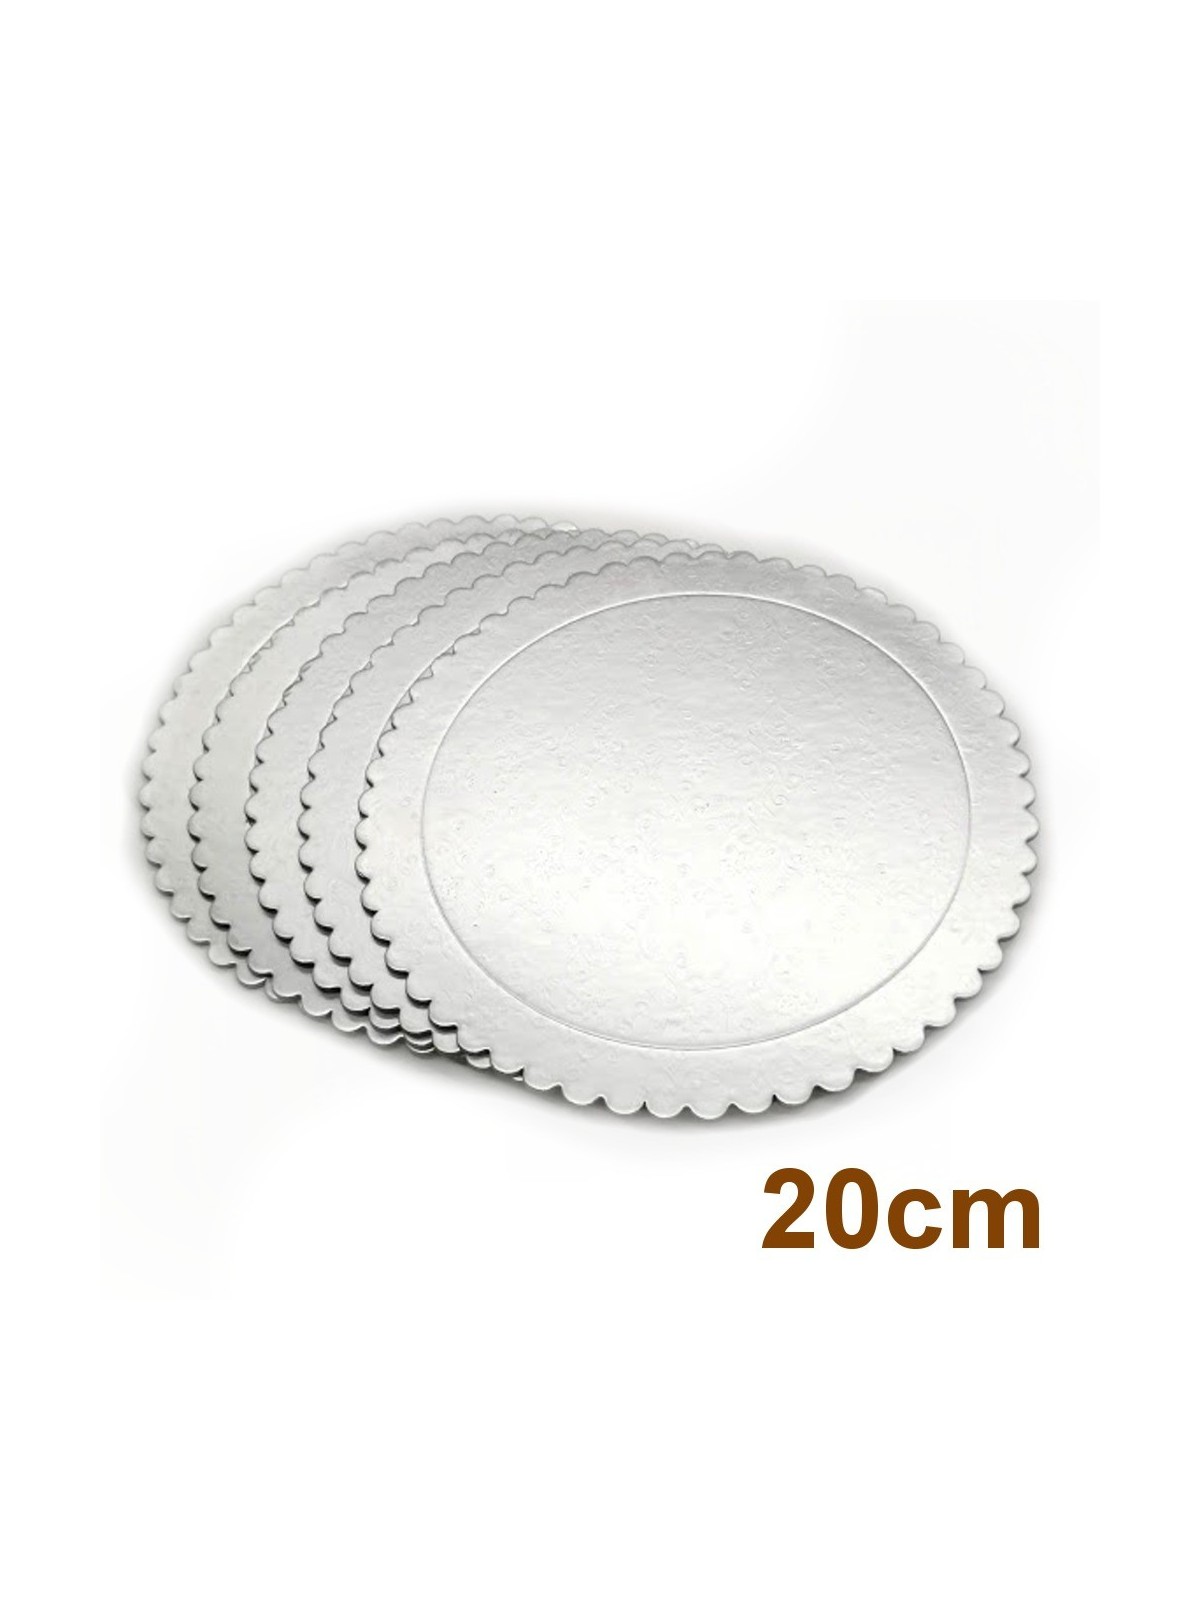 Set of 5pcs pad under silver cake - round - 20cm